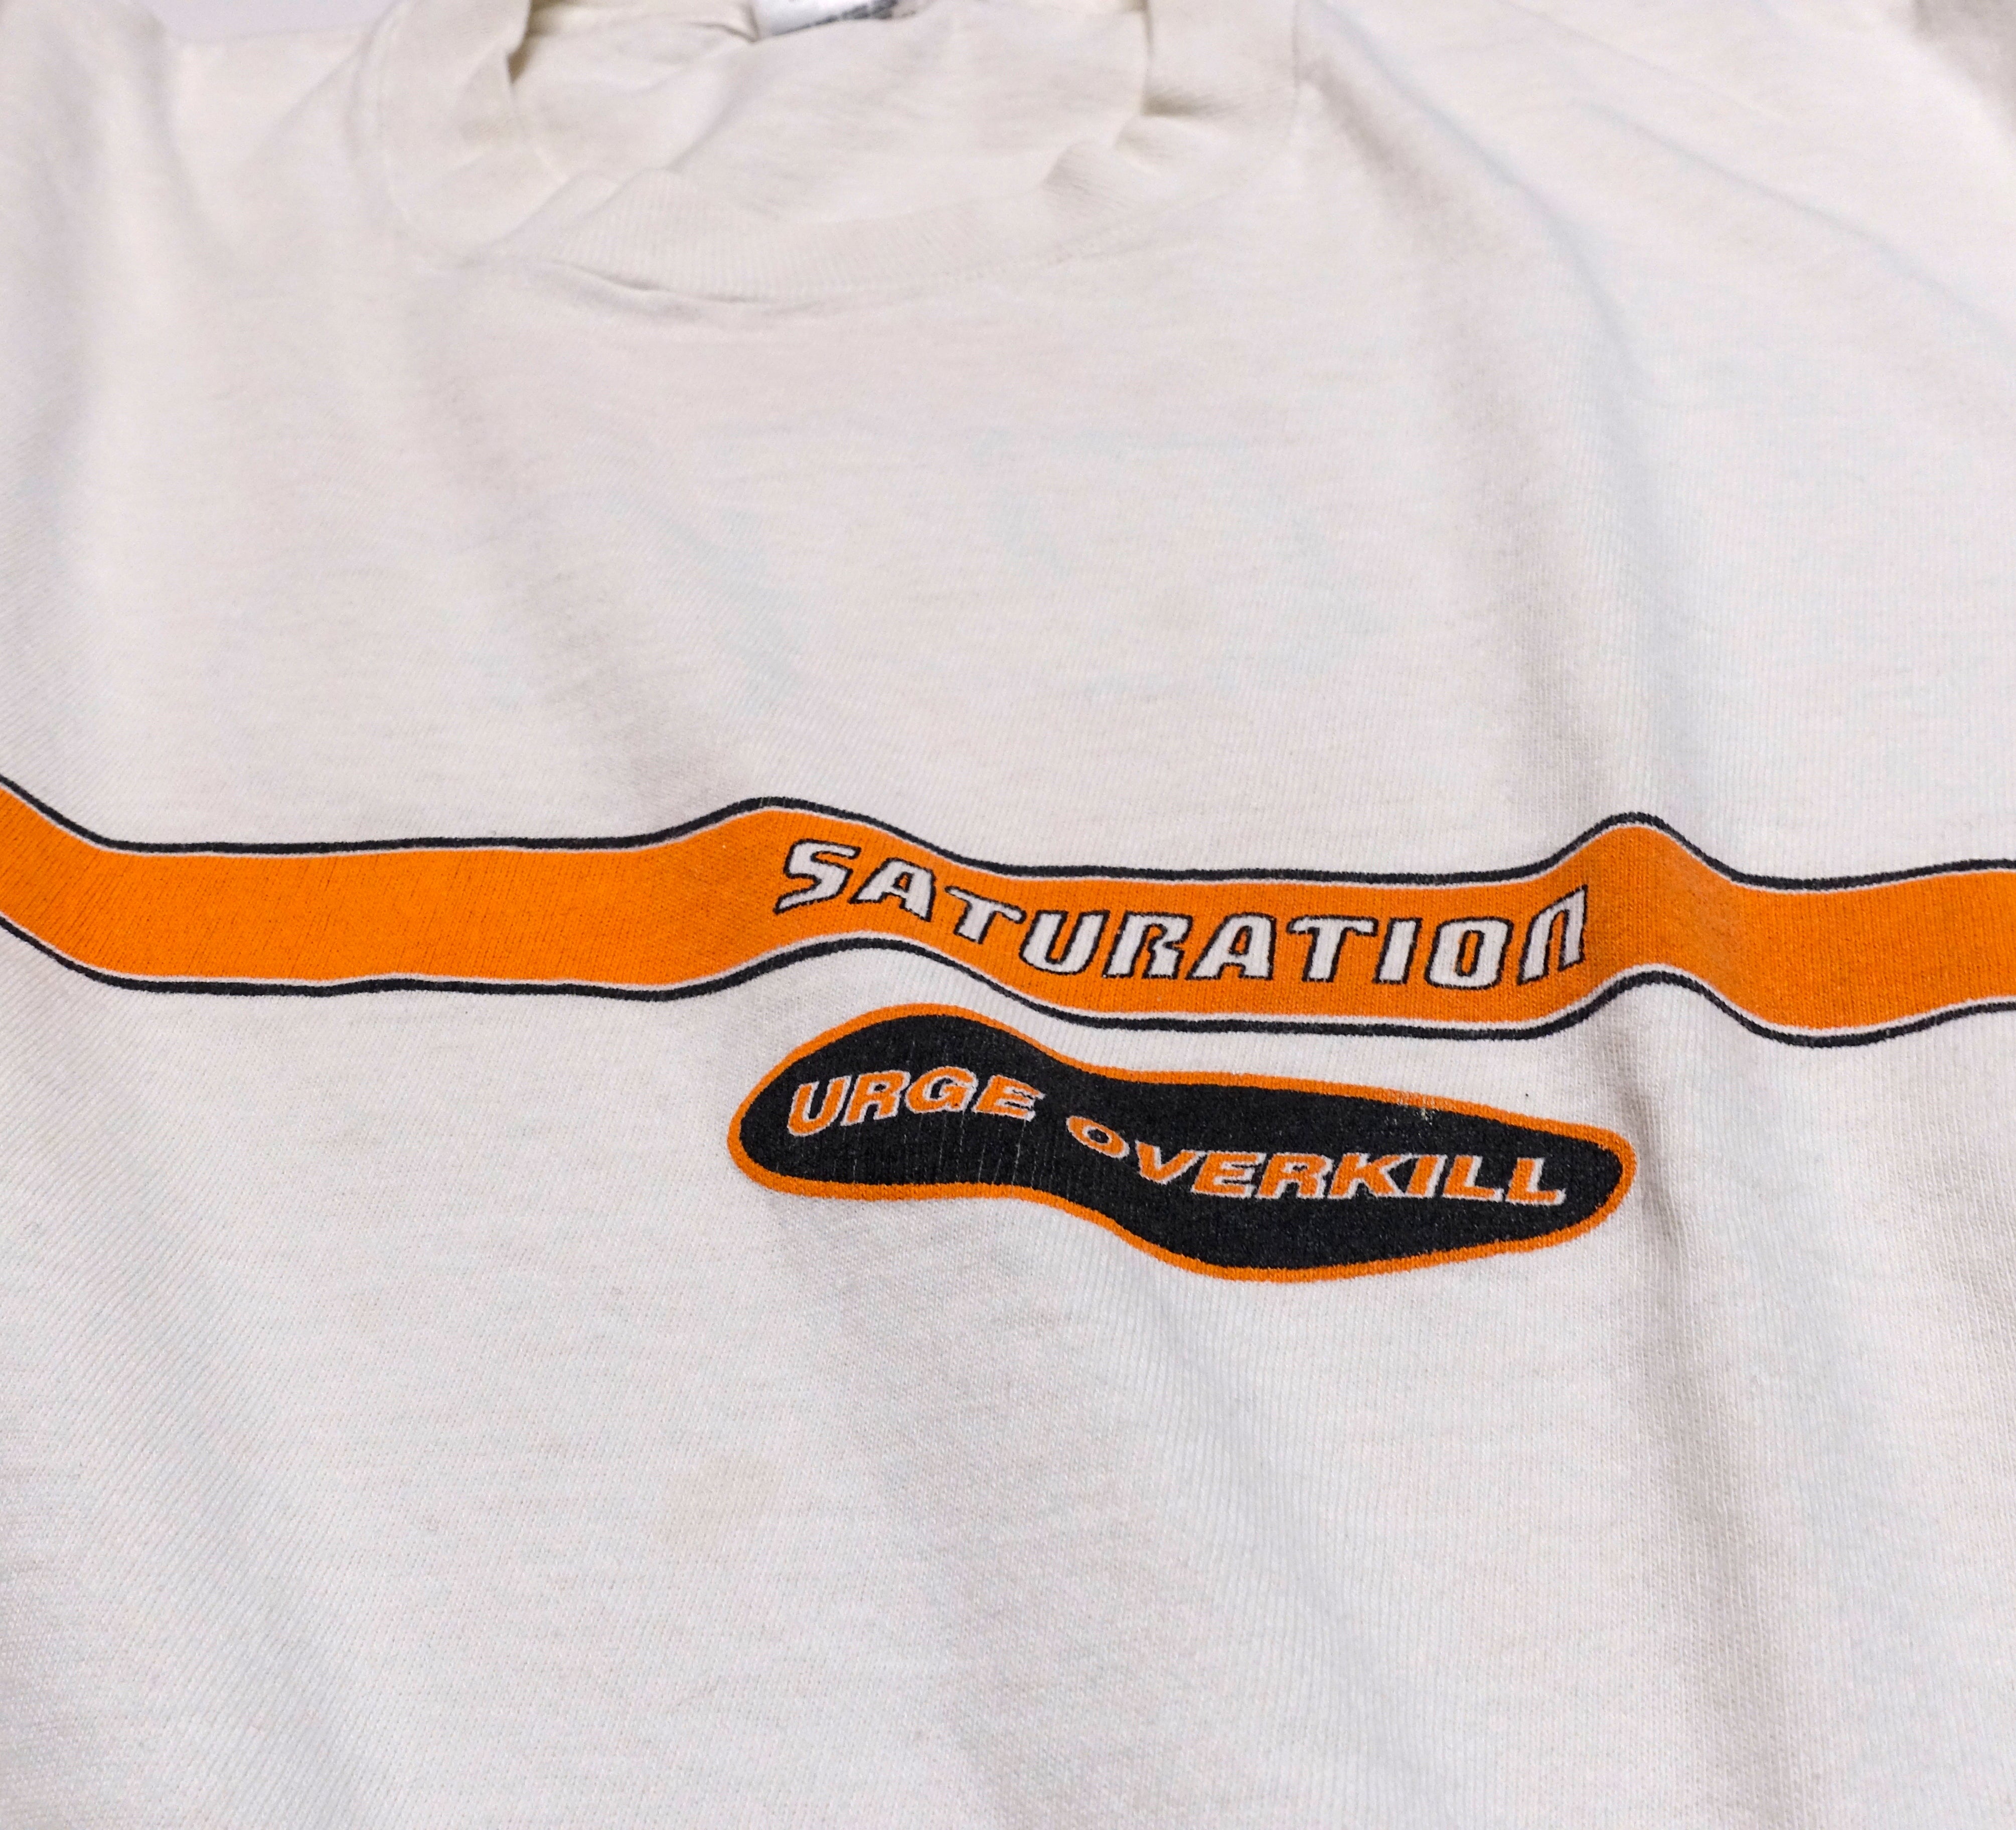 Urge Overkill - Saturation 1993 Tour Shirt Size XL